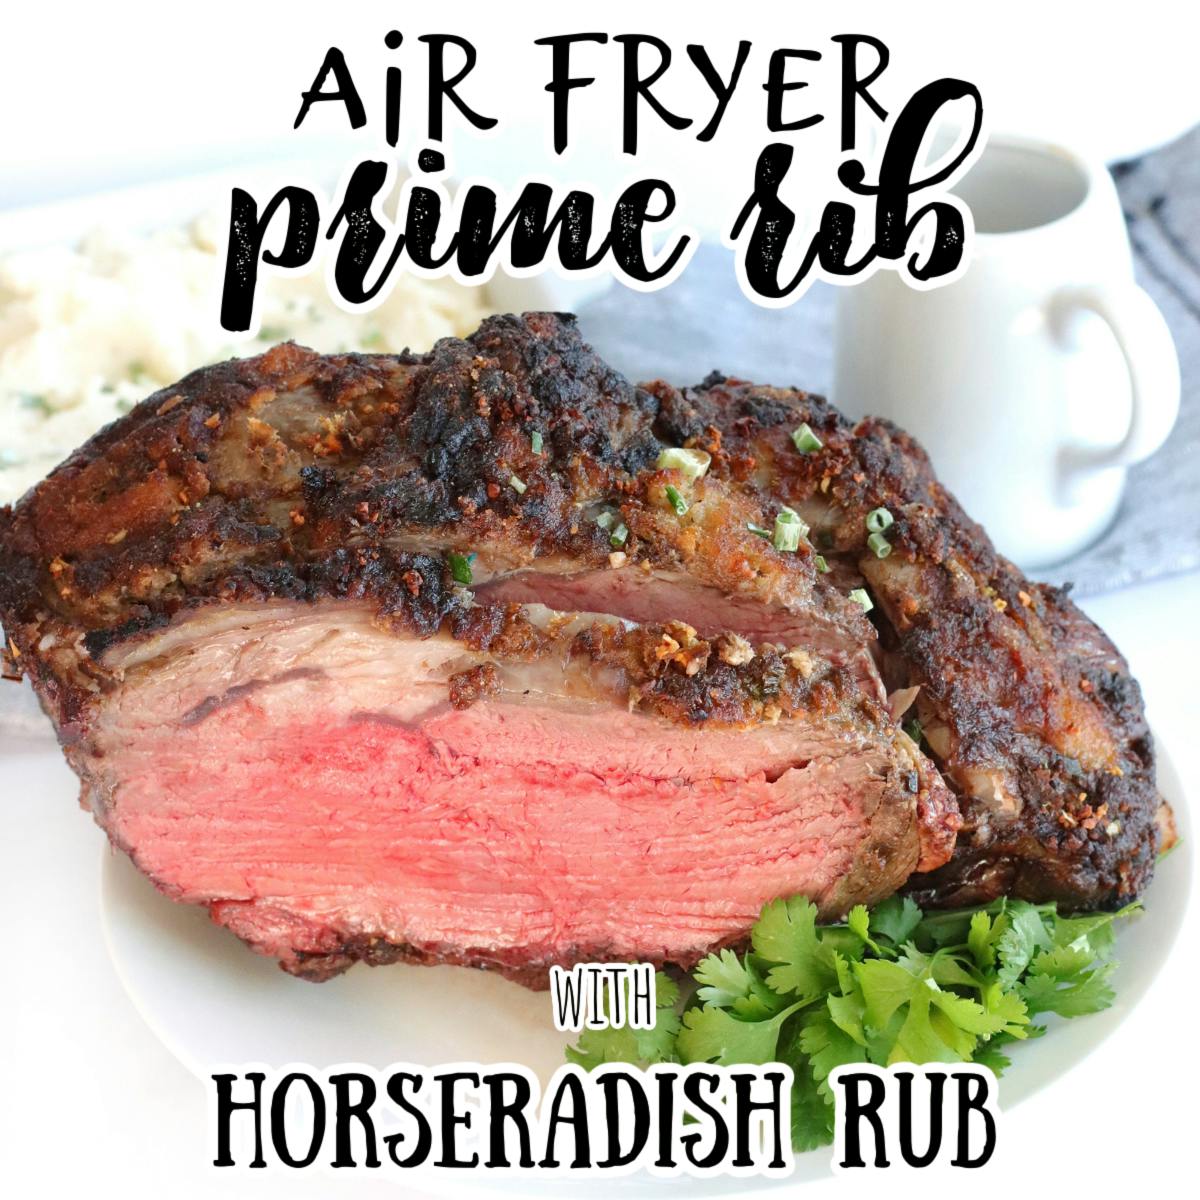 Air fryer prime rib with horseradish crust